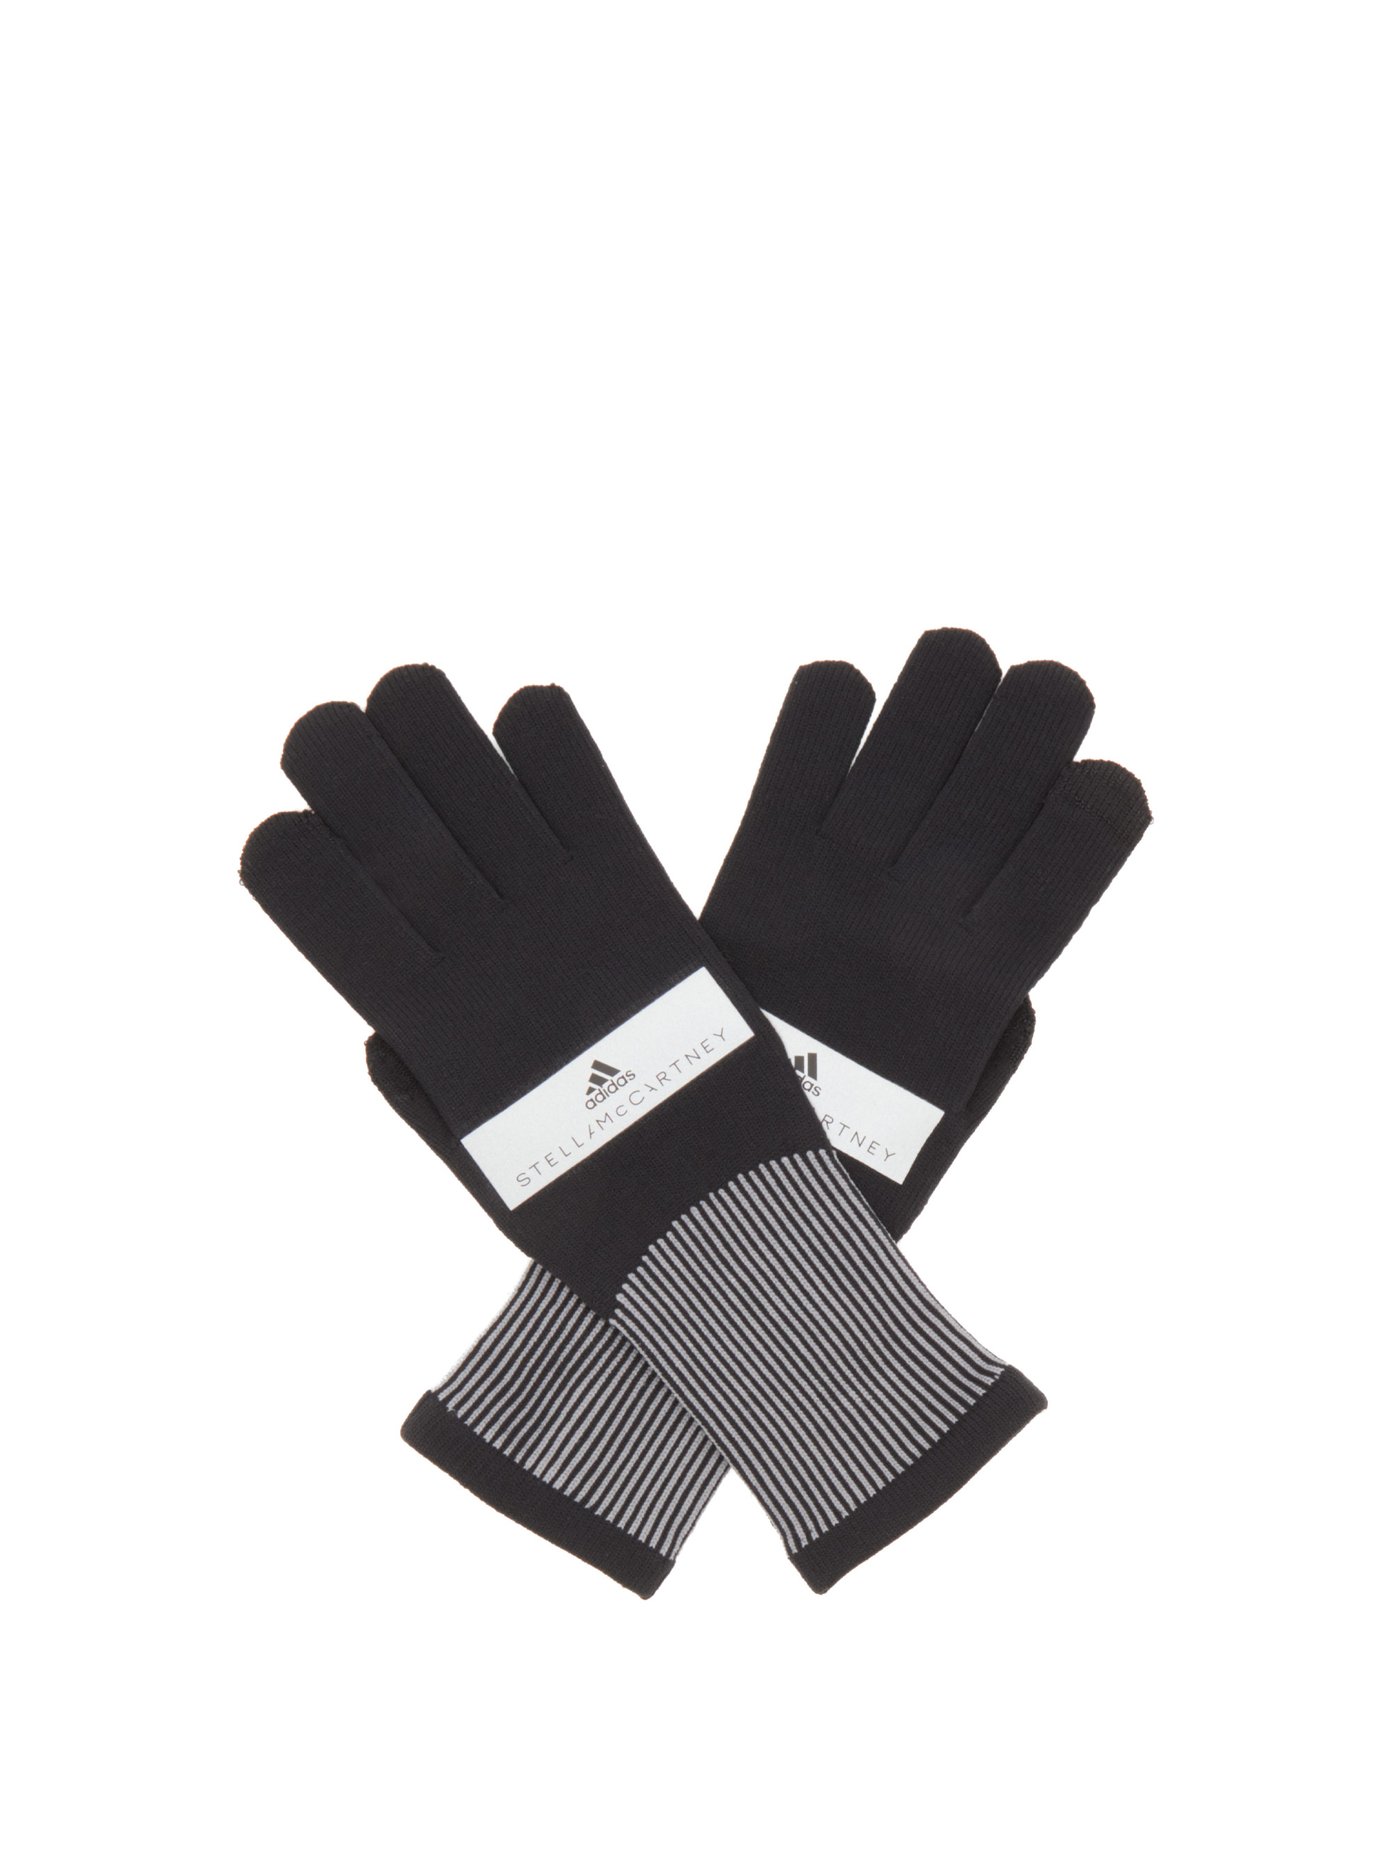 adidas running gloves uk